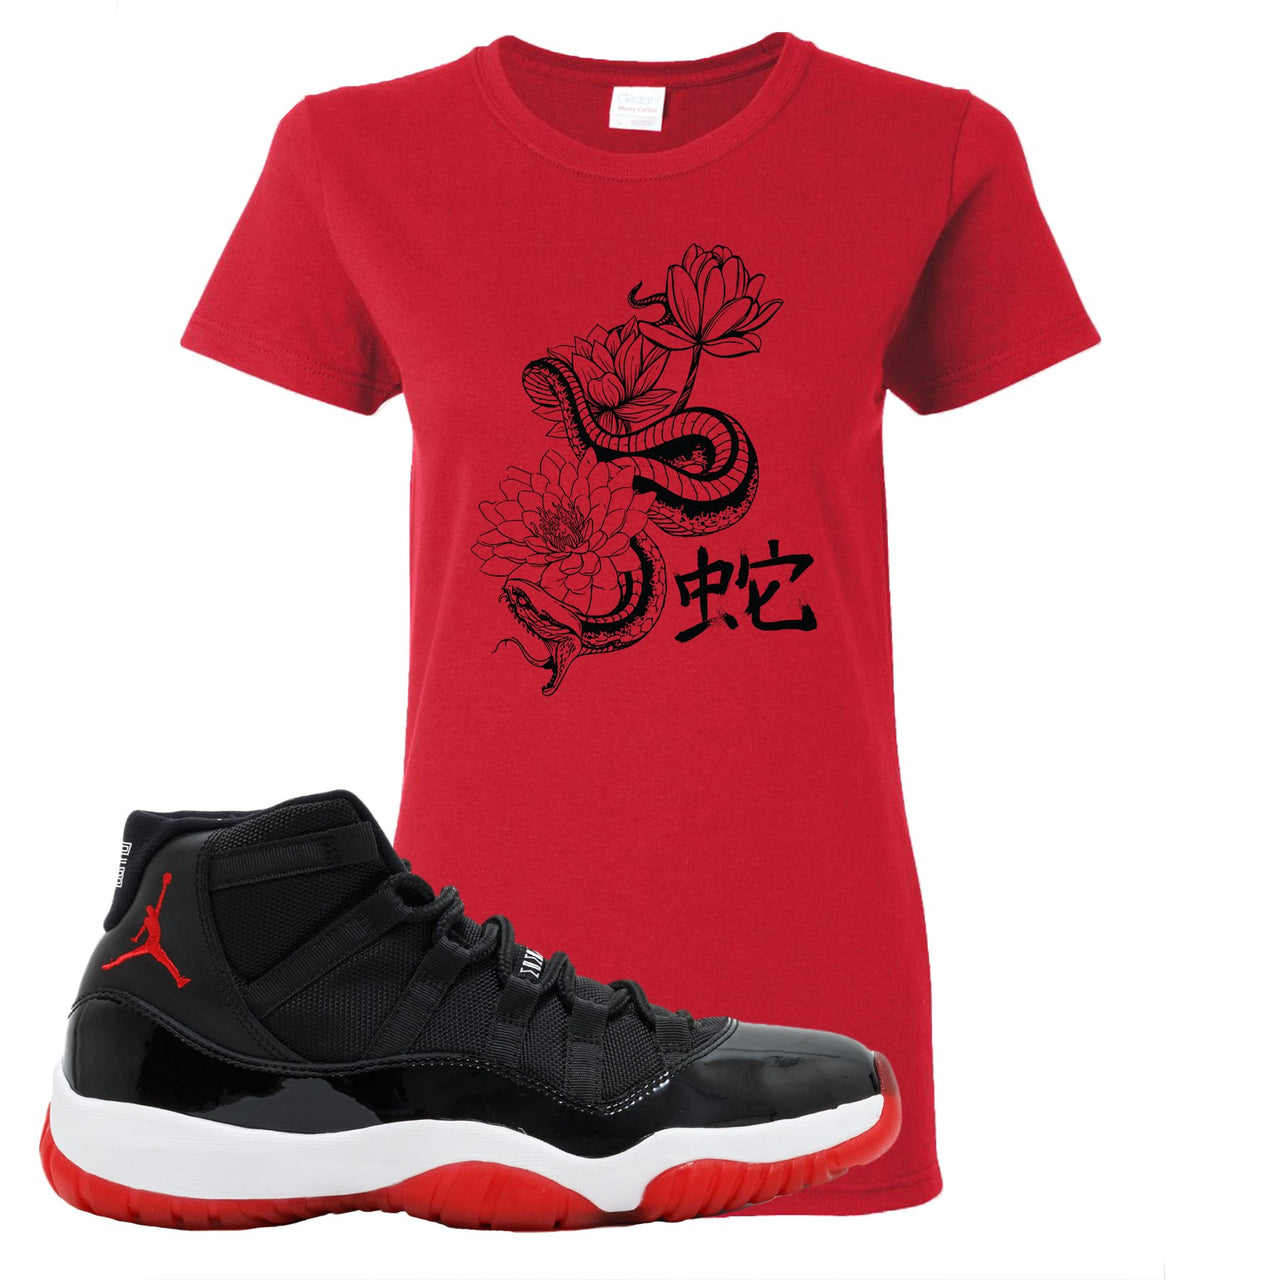 Jordan 11 Bred Snake Lotus Red Sneaker Hook Up Women's T-Shirt